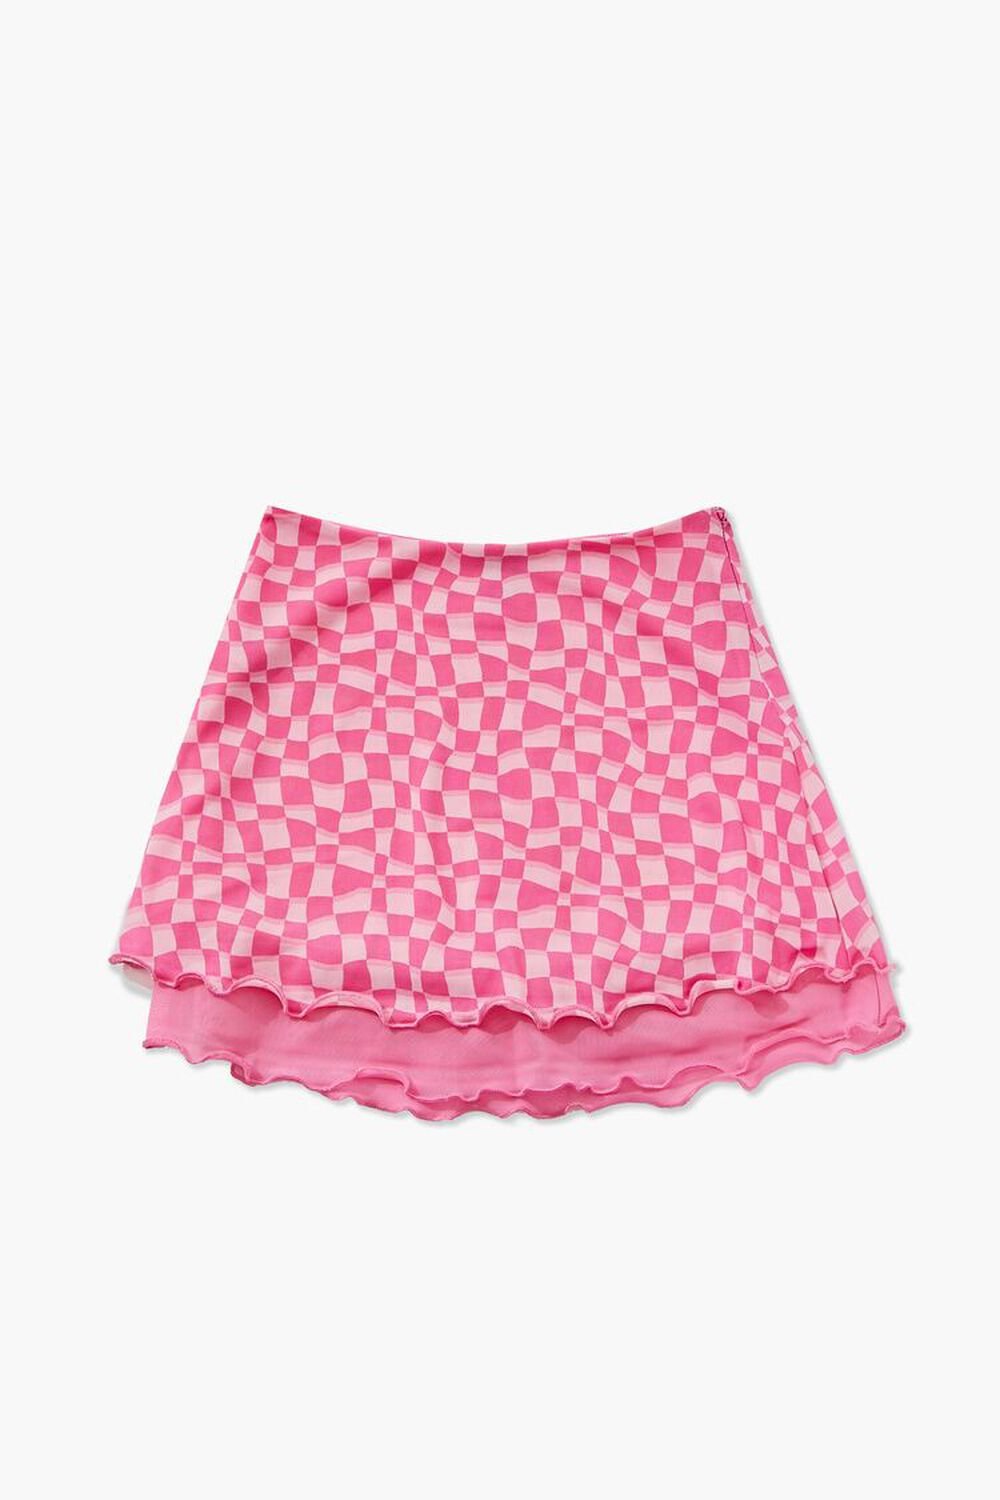 PINK/ORANGE Girls Checkered Tiered Skirt (Kids), image 1